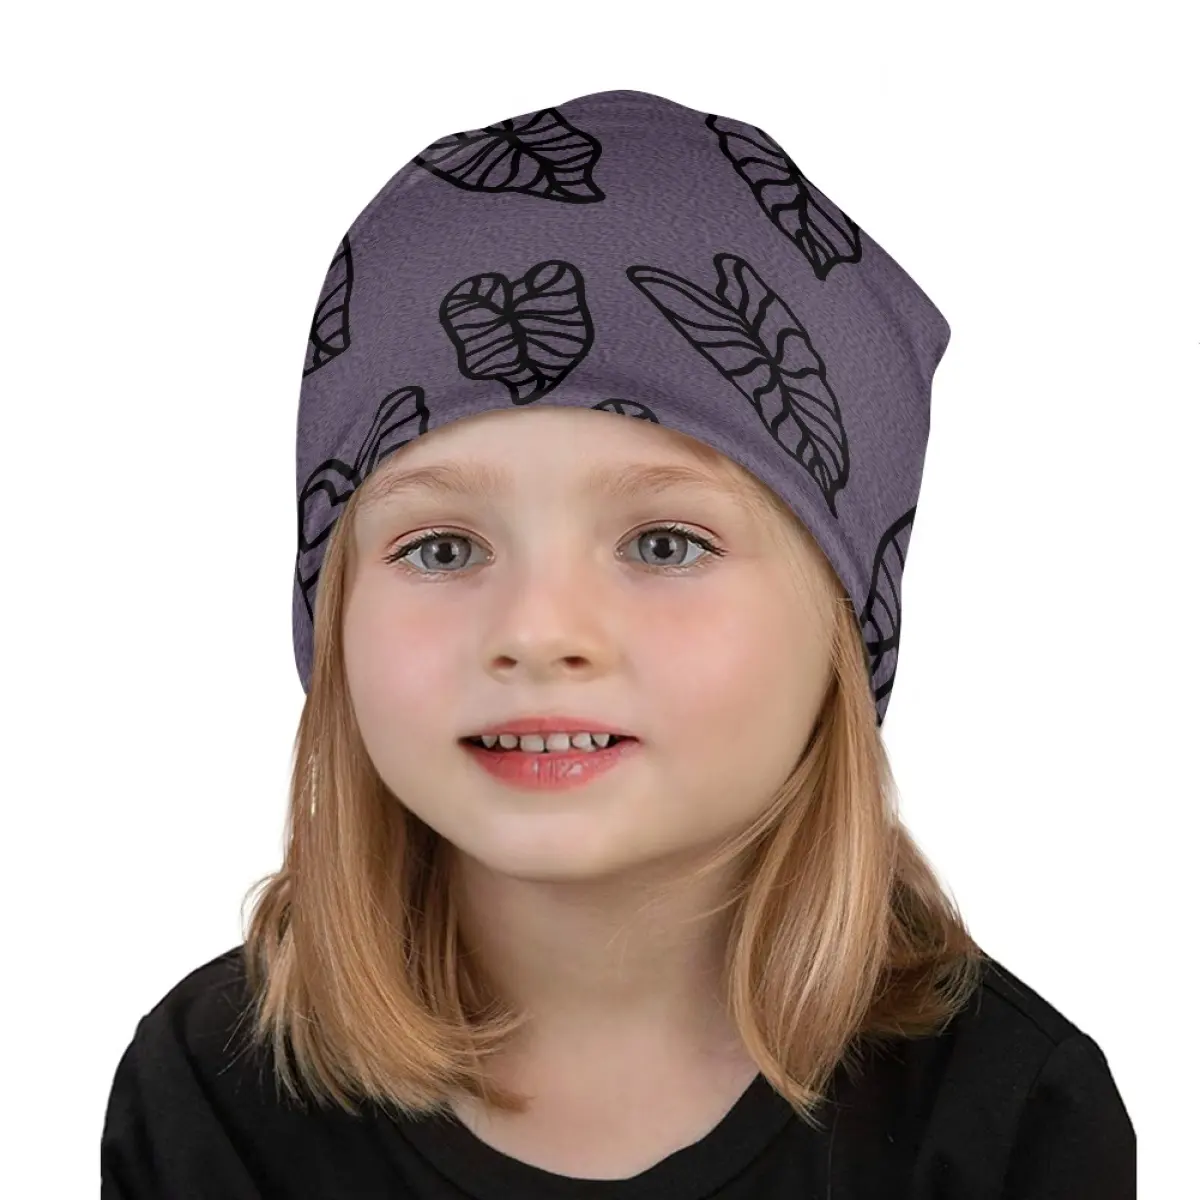 Gorro cálido para niños, diseño de hoja de Kalo púrpura, envío directo, Otoño Invierno, sombrero para exteriores, nombre personalizado/gorros de texto, sombreros para niñas y niños